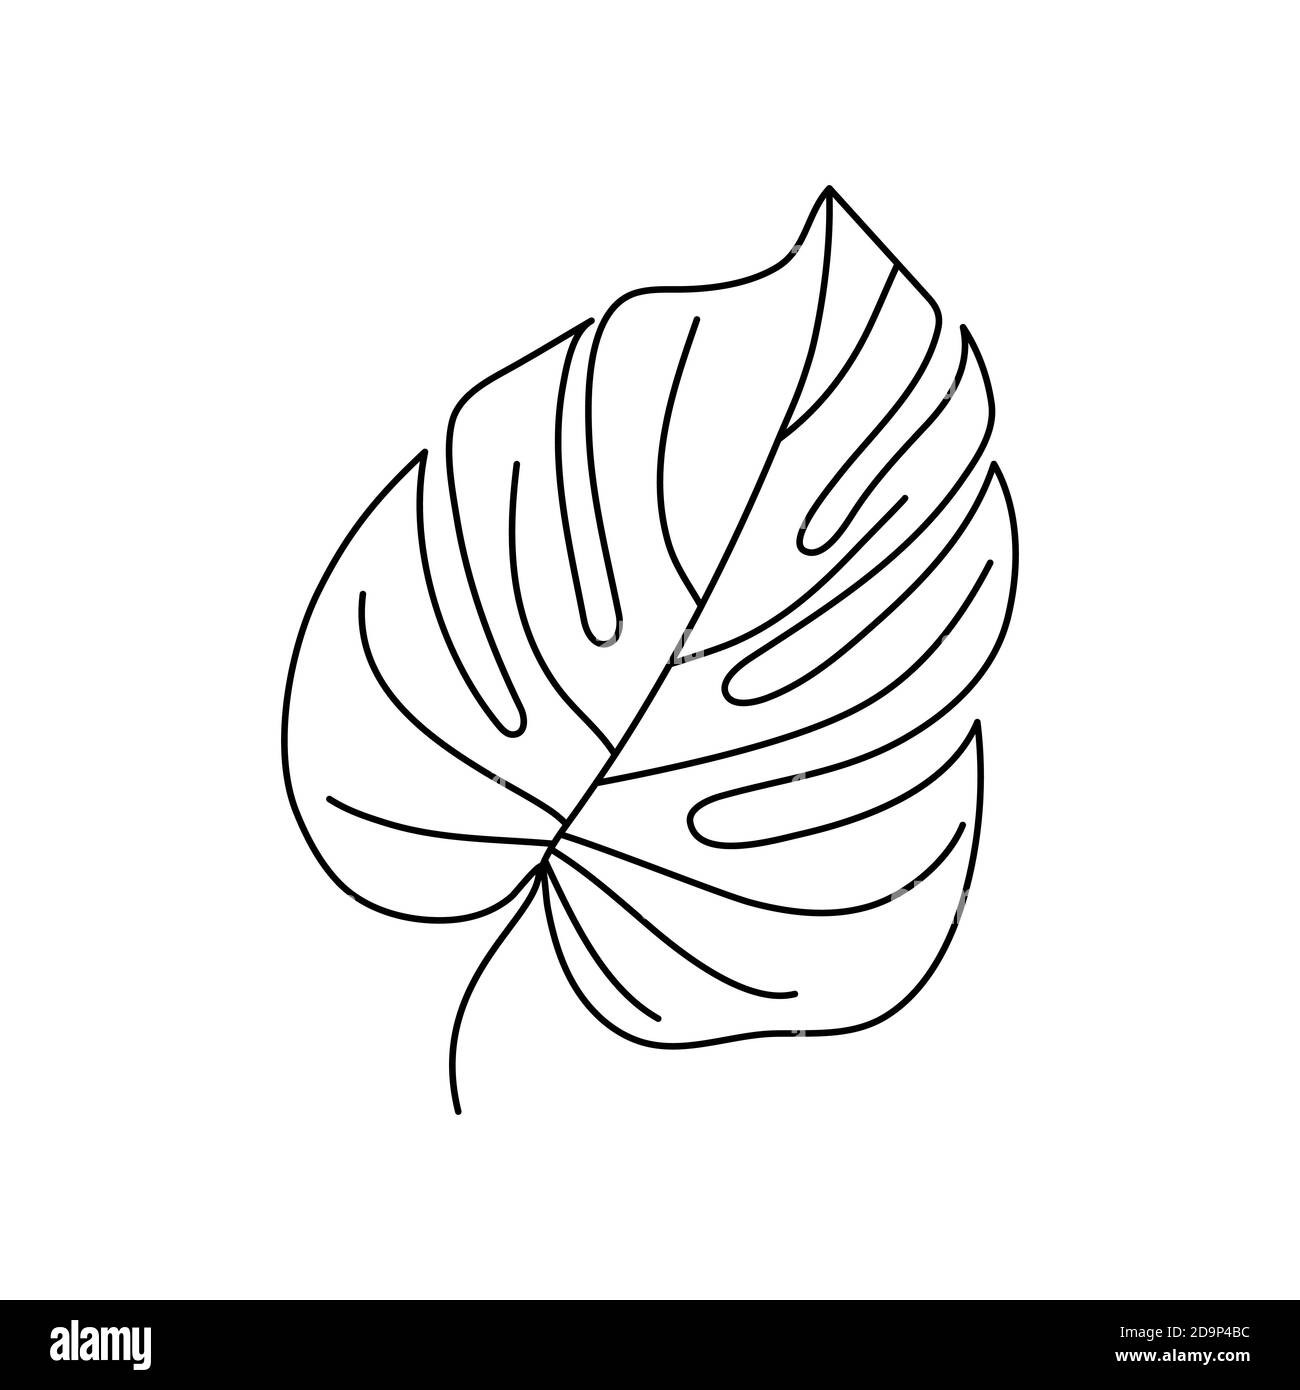 tropical-leaf-outline